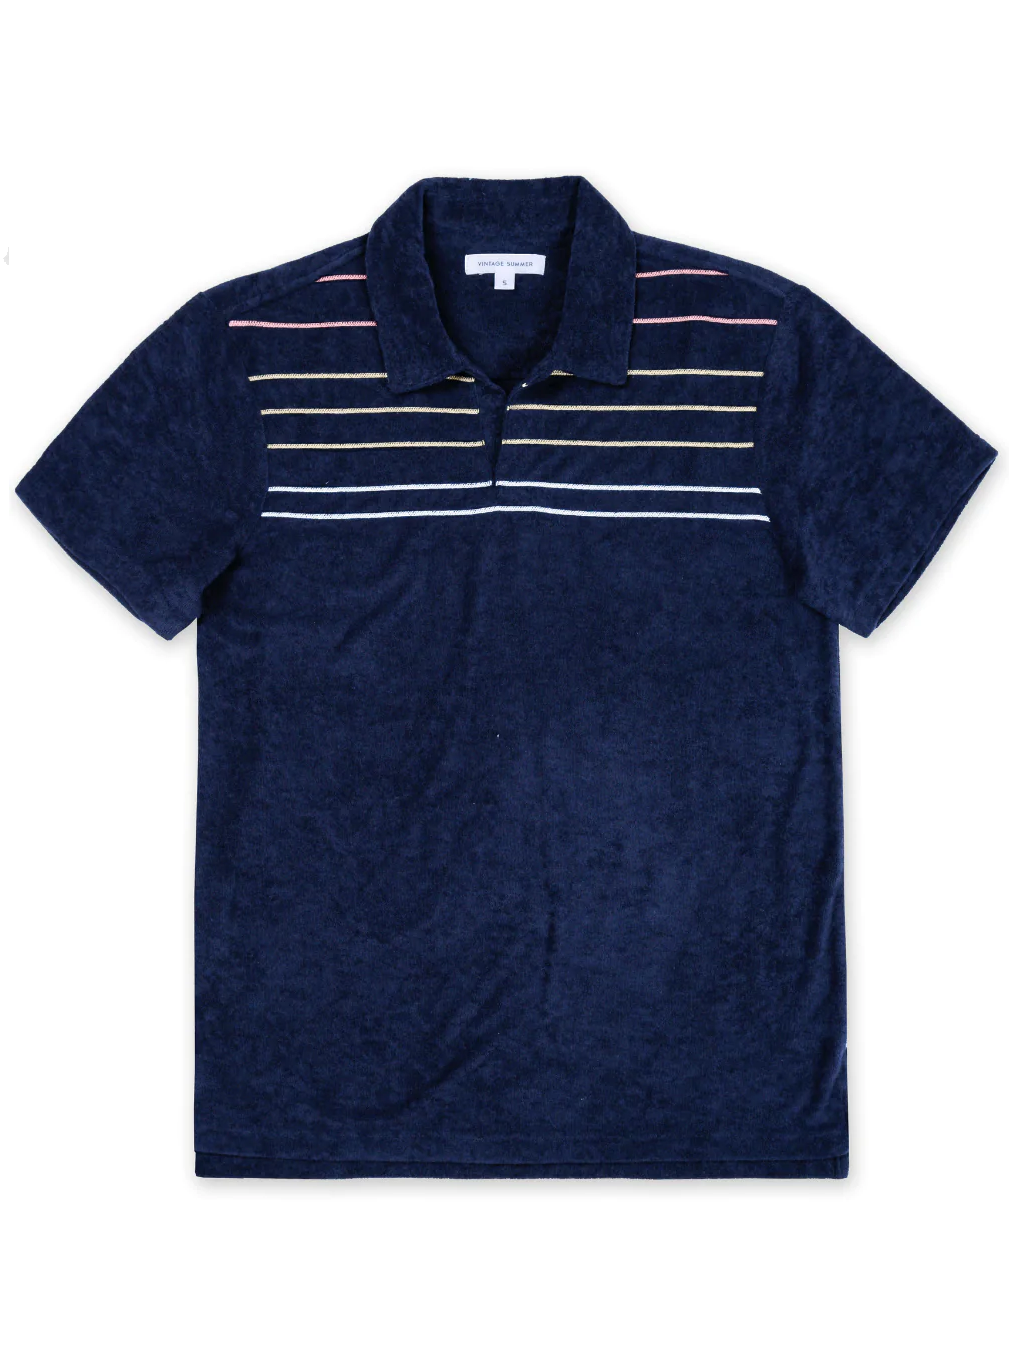 vintage summer terry towel polo shirt navy stripe - fullkit.com